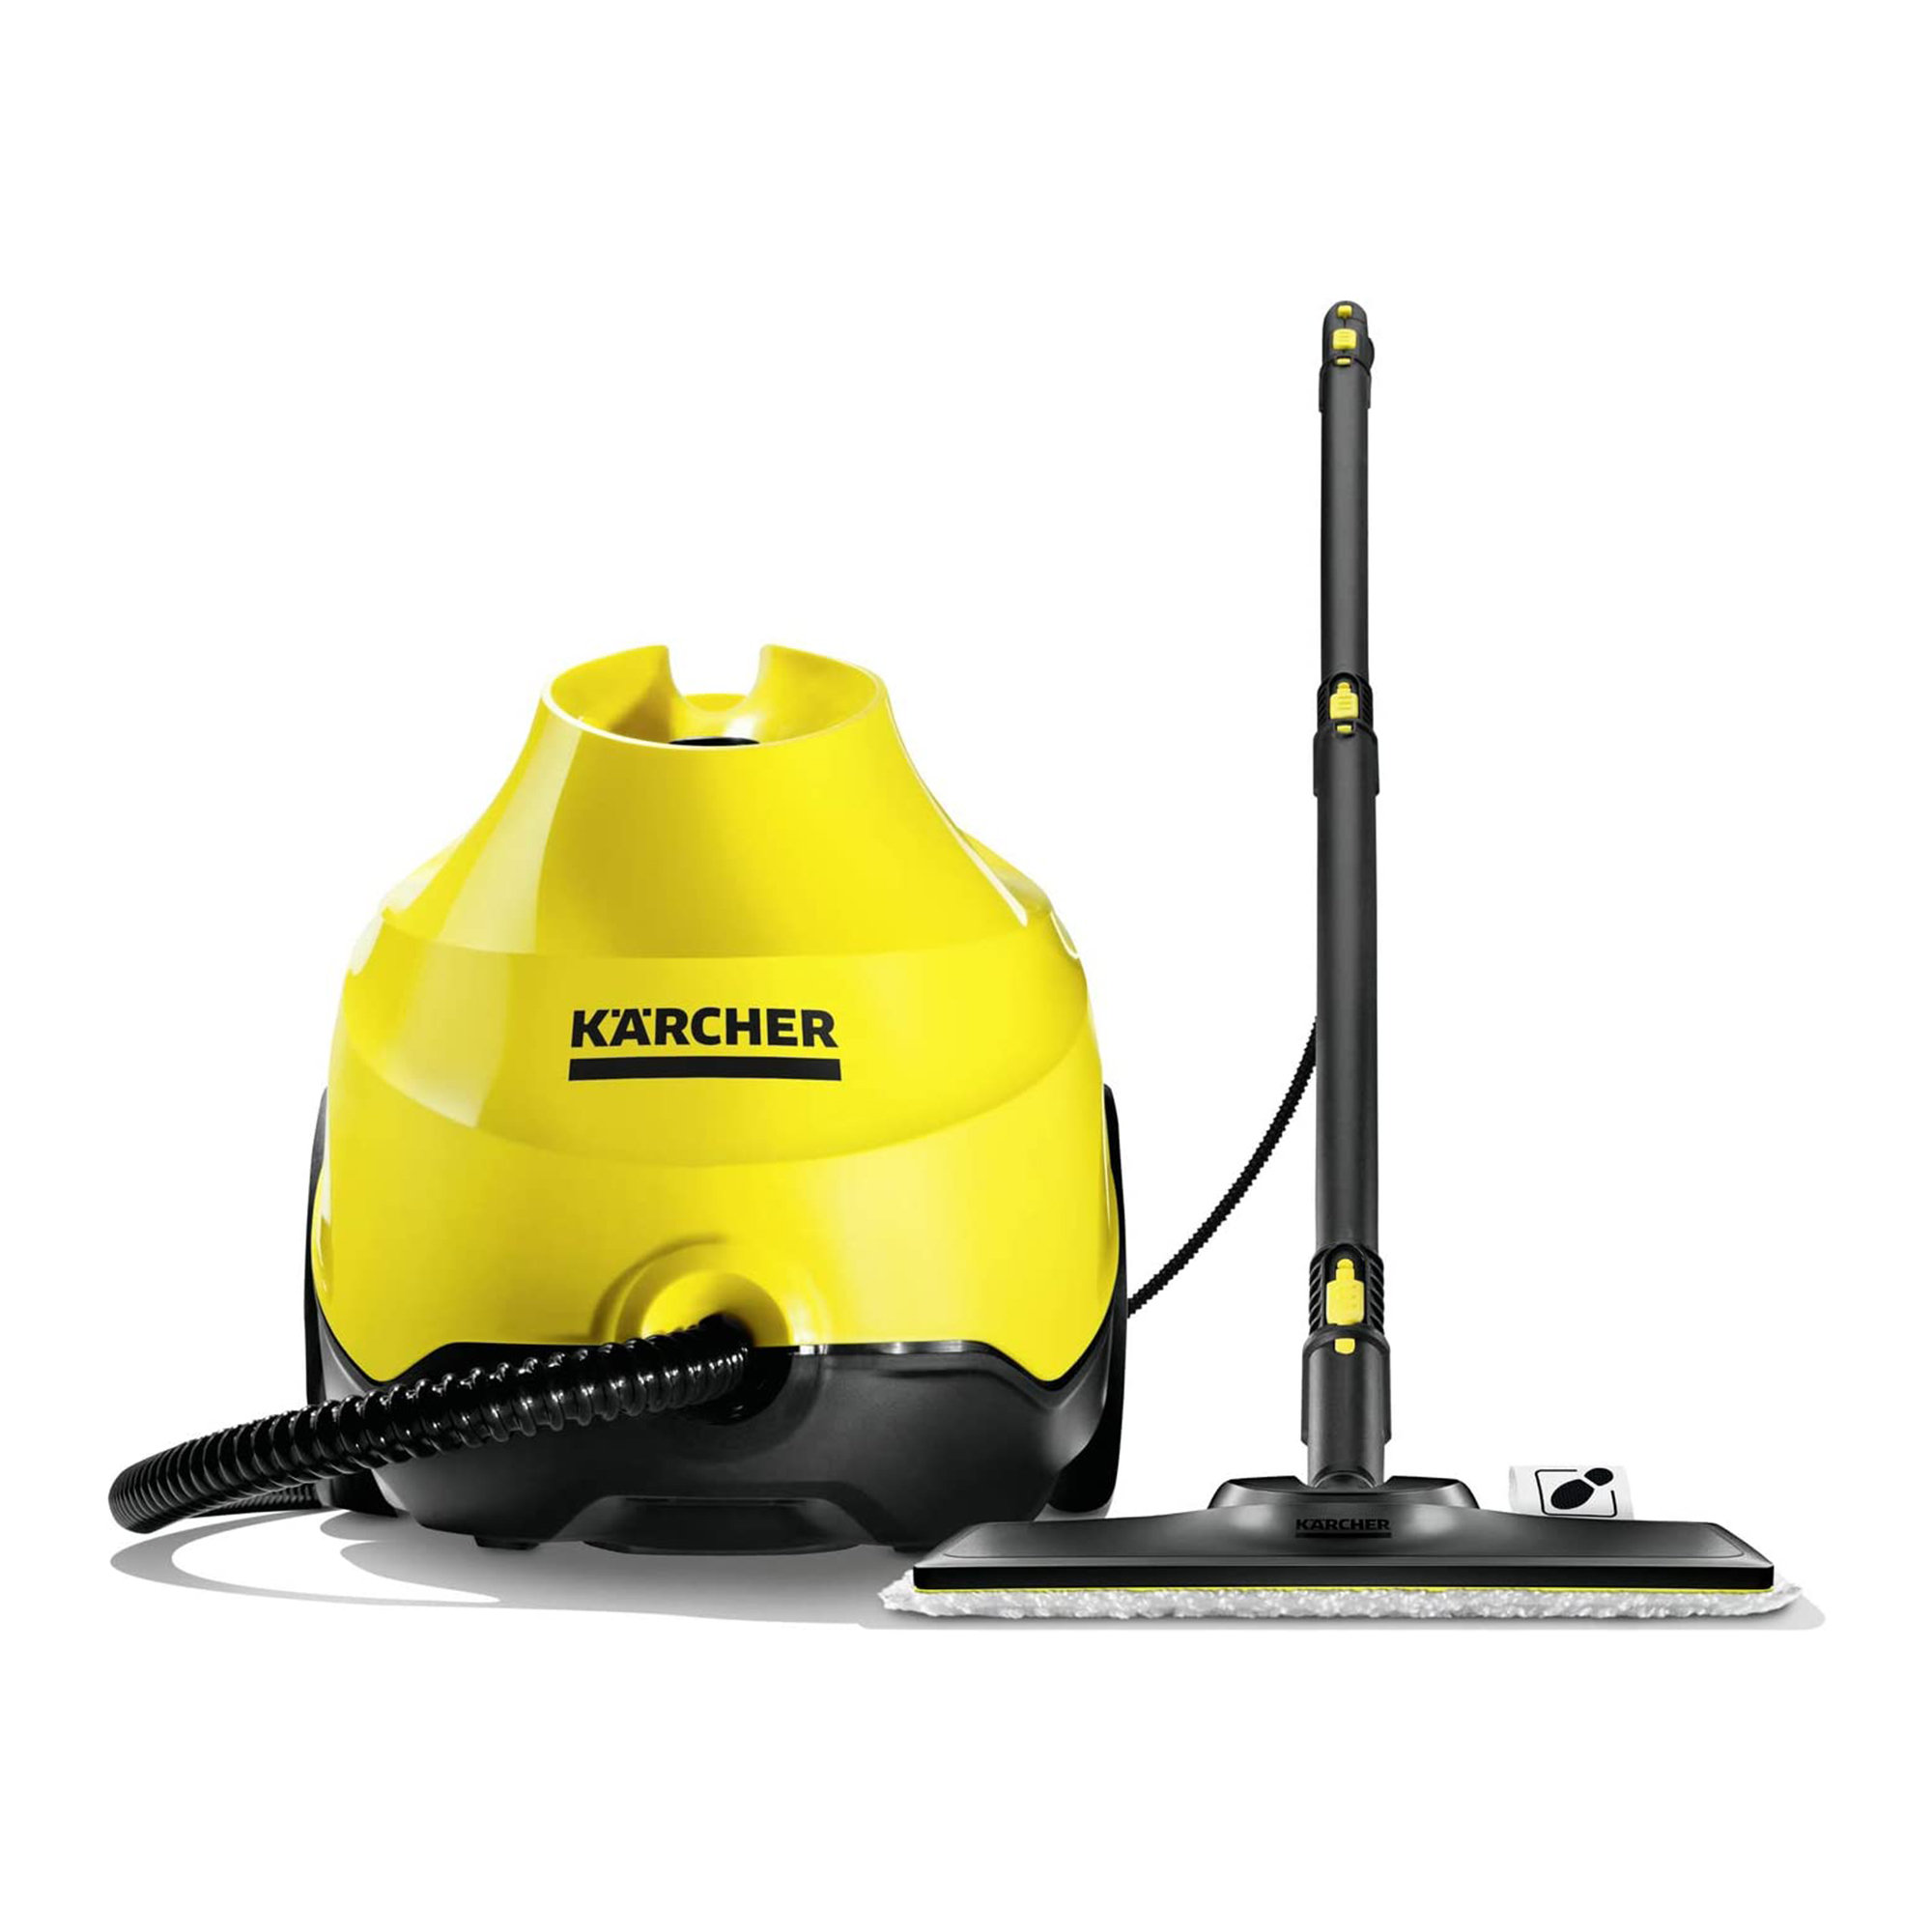 Karcher SC 5 EasyFix Steam Cleaner - Descaling KAR15125320 